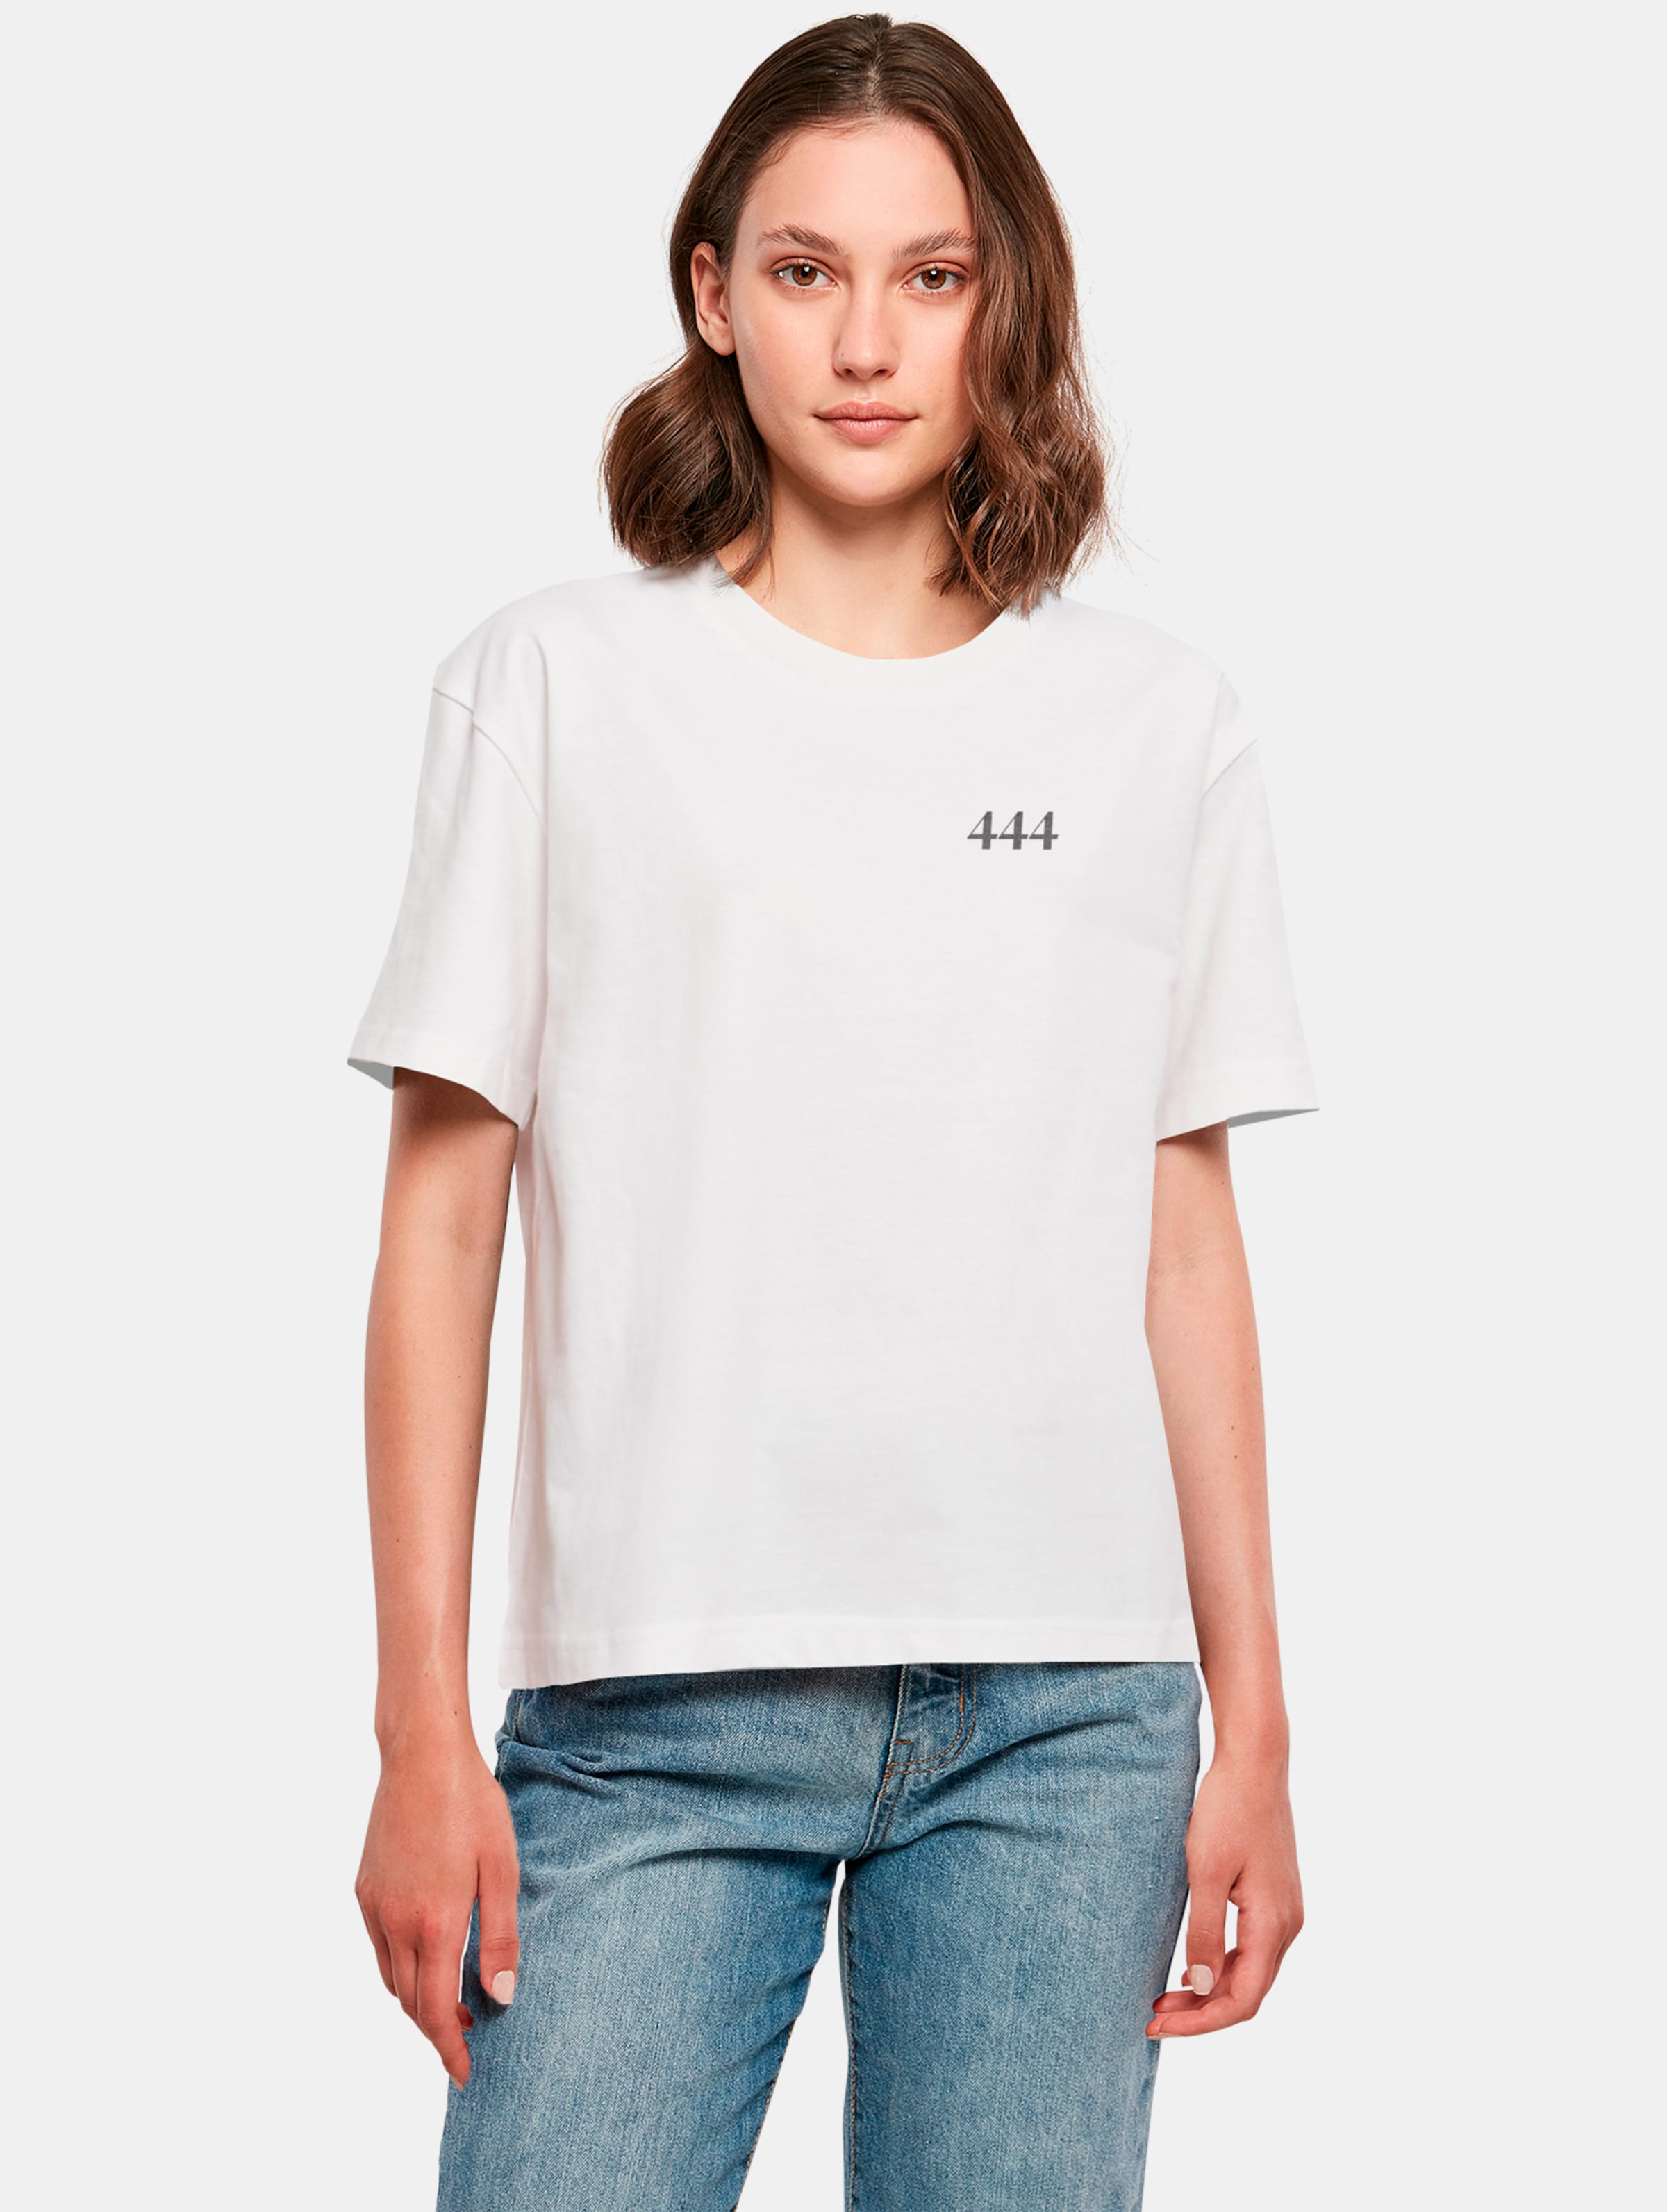 Miss Tee 444 Protection T-Shirts Frauen,Unisex op kleur wit, Maat XL